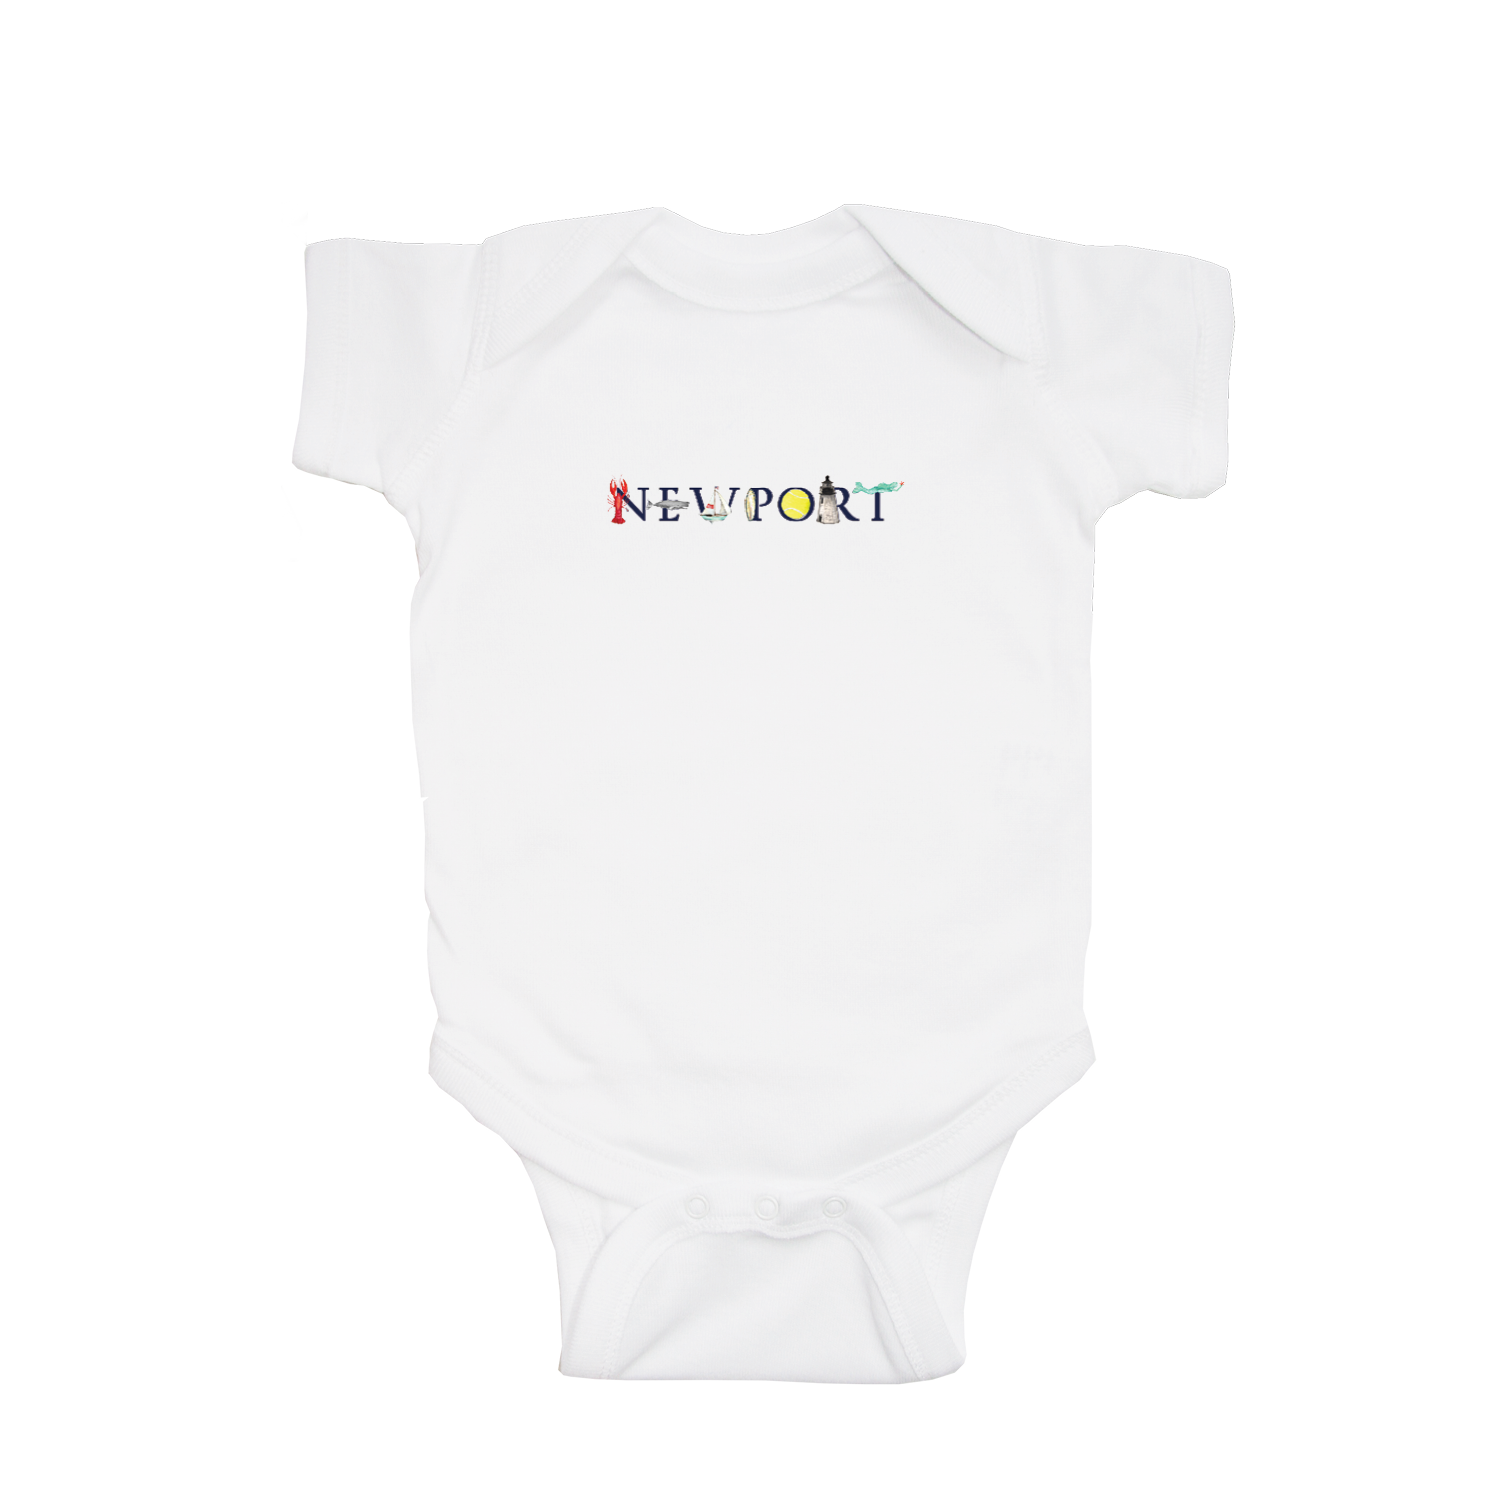 Newport baby snap up short sleeve